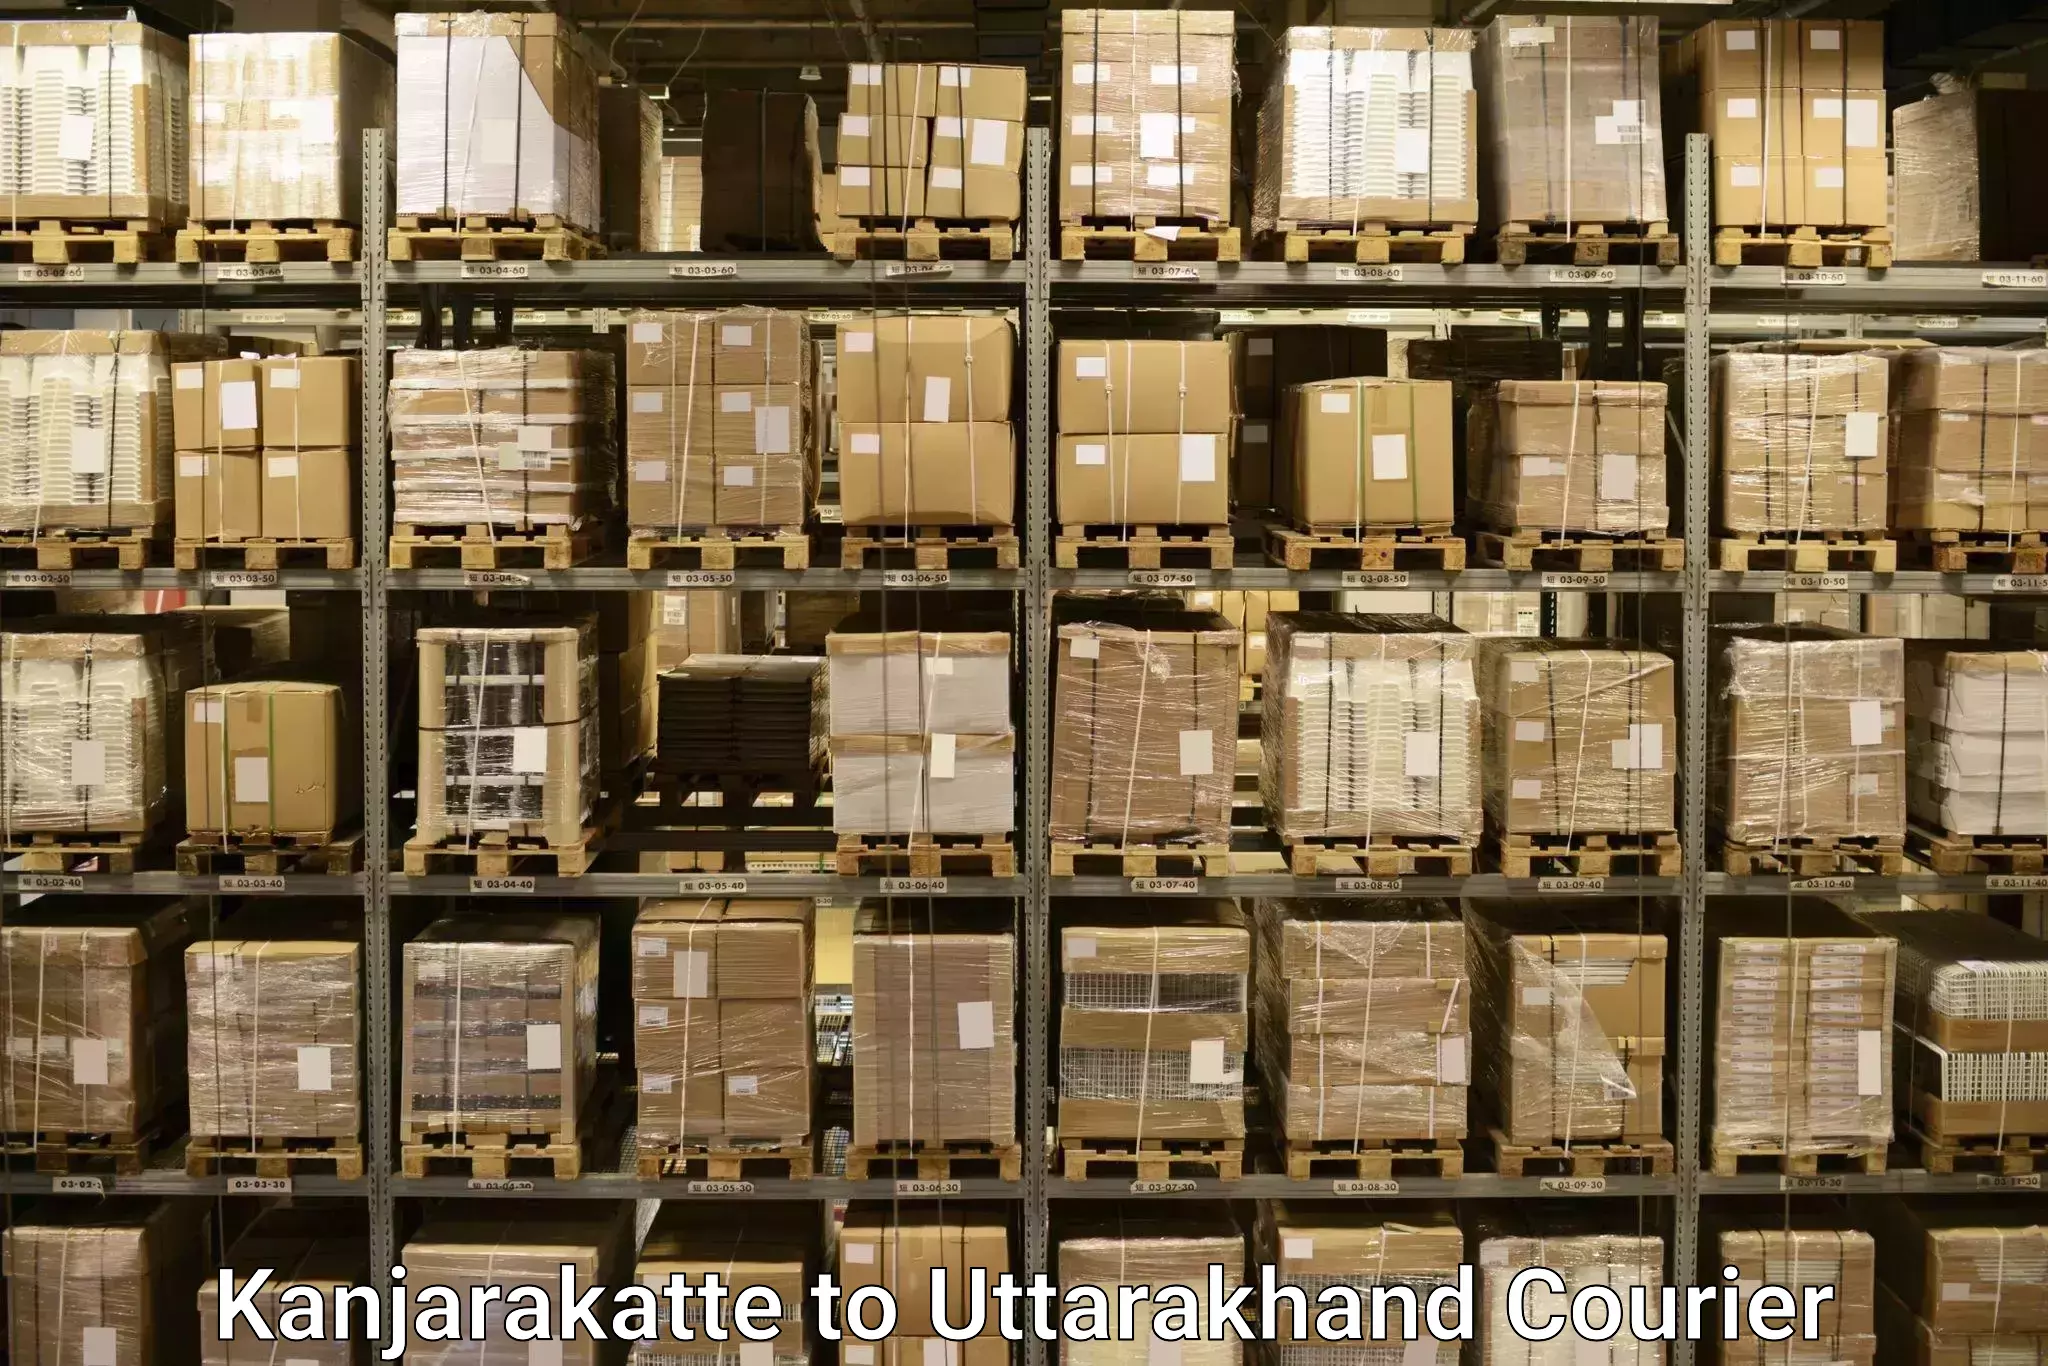 Personal effects shipping in Kanjarakatte to Rishikesh